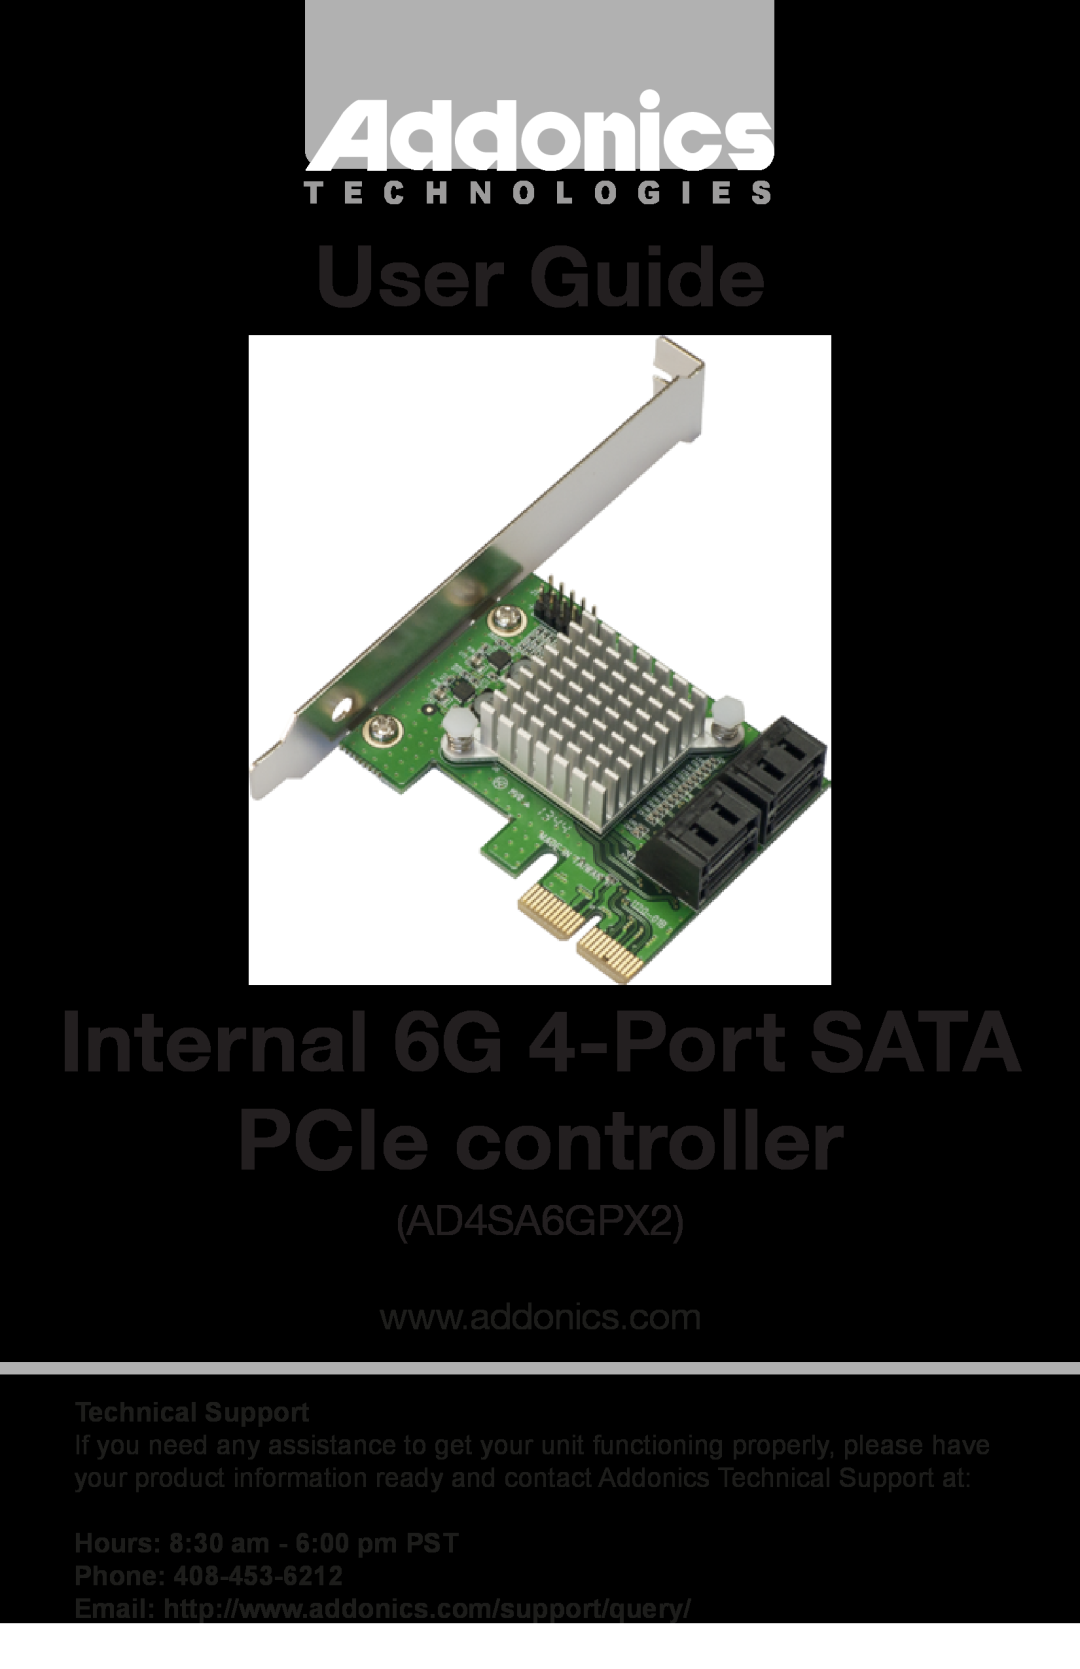 Addonics Technologies AD4SA6GPX2 manual User Guide Internal 6G 4-Port SATA PCIe controller, T E C H N O L O G I E S 